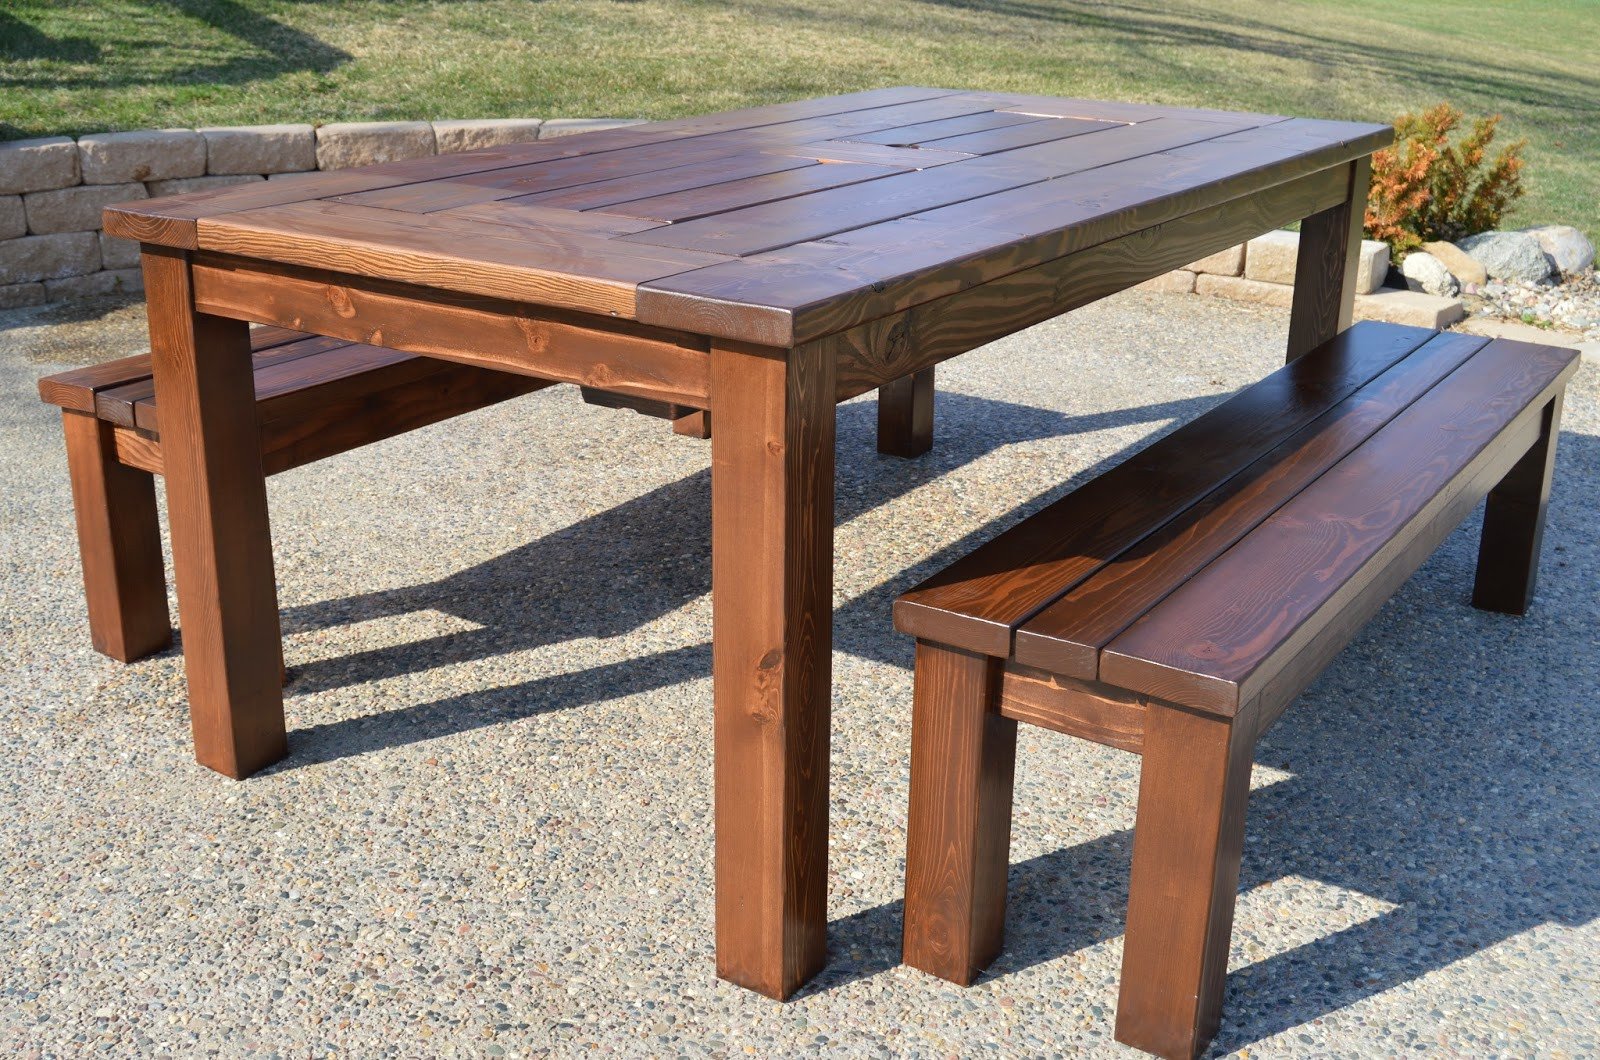 DIY Wooden Patio Table
 Remodelaholic